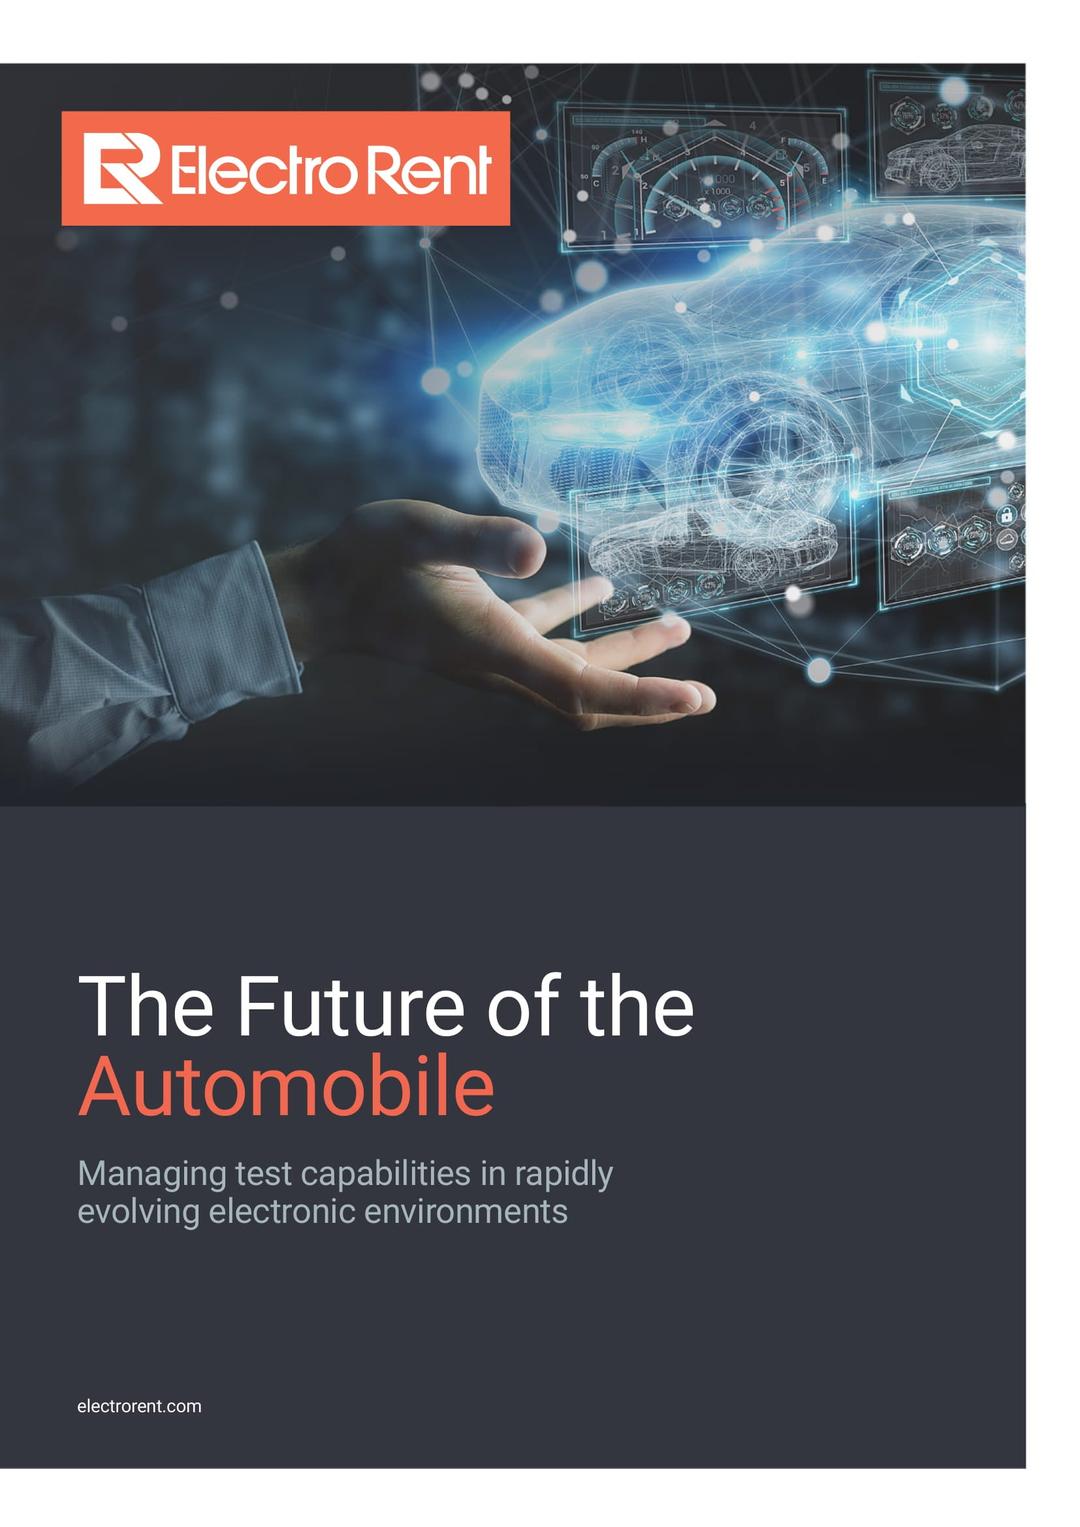 The Future of the Automobile, image